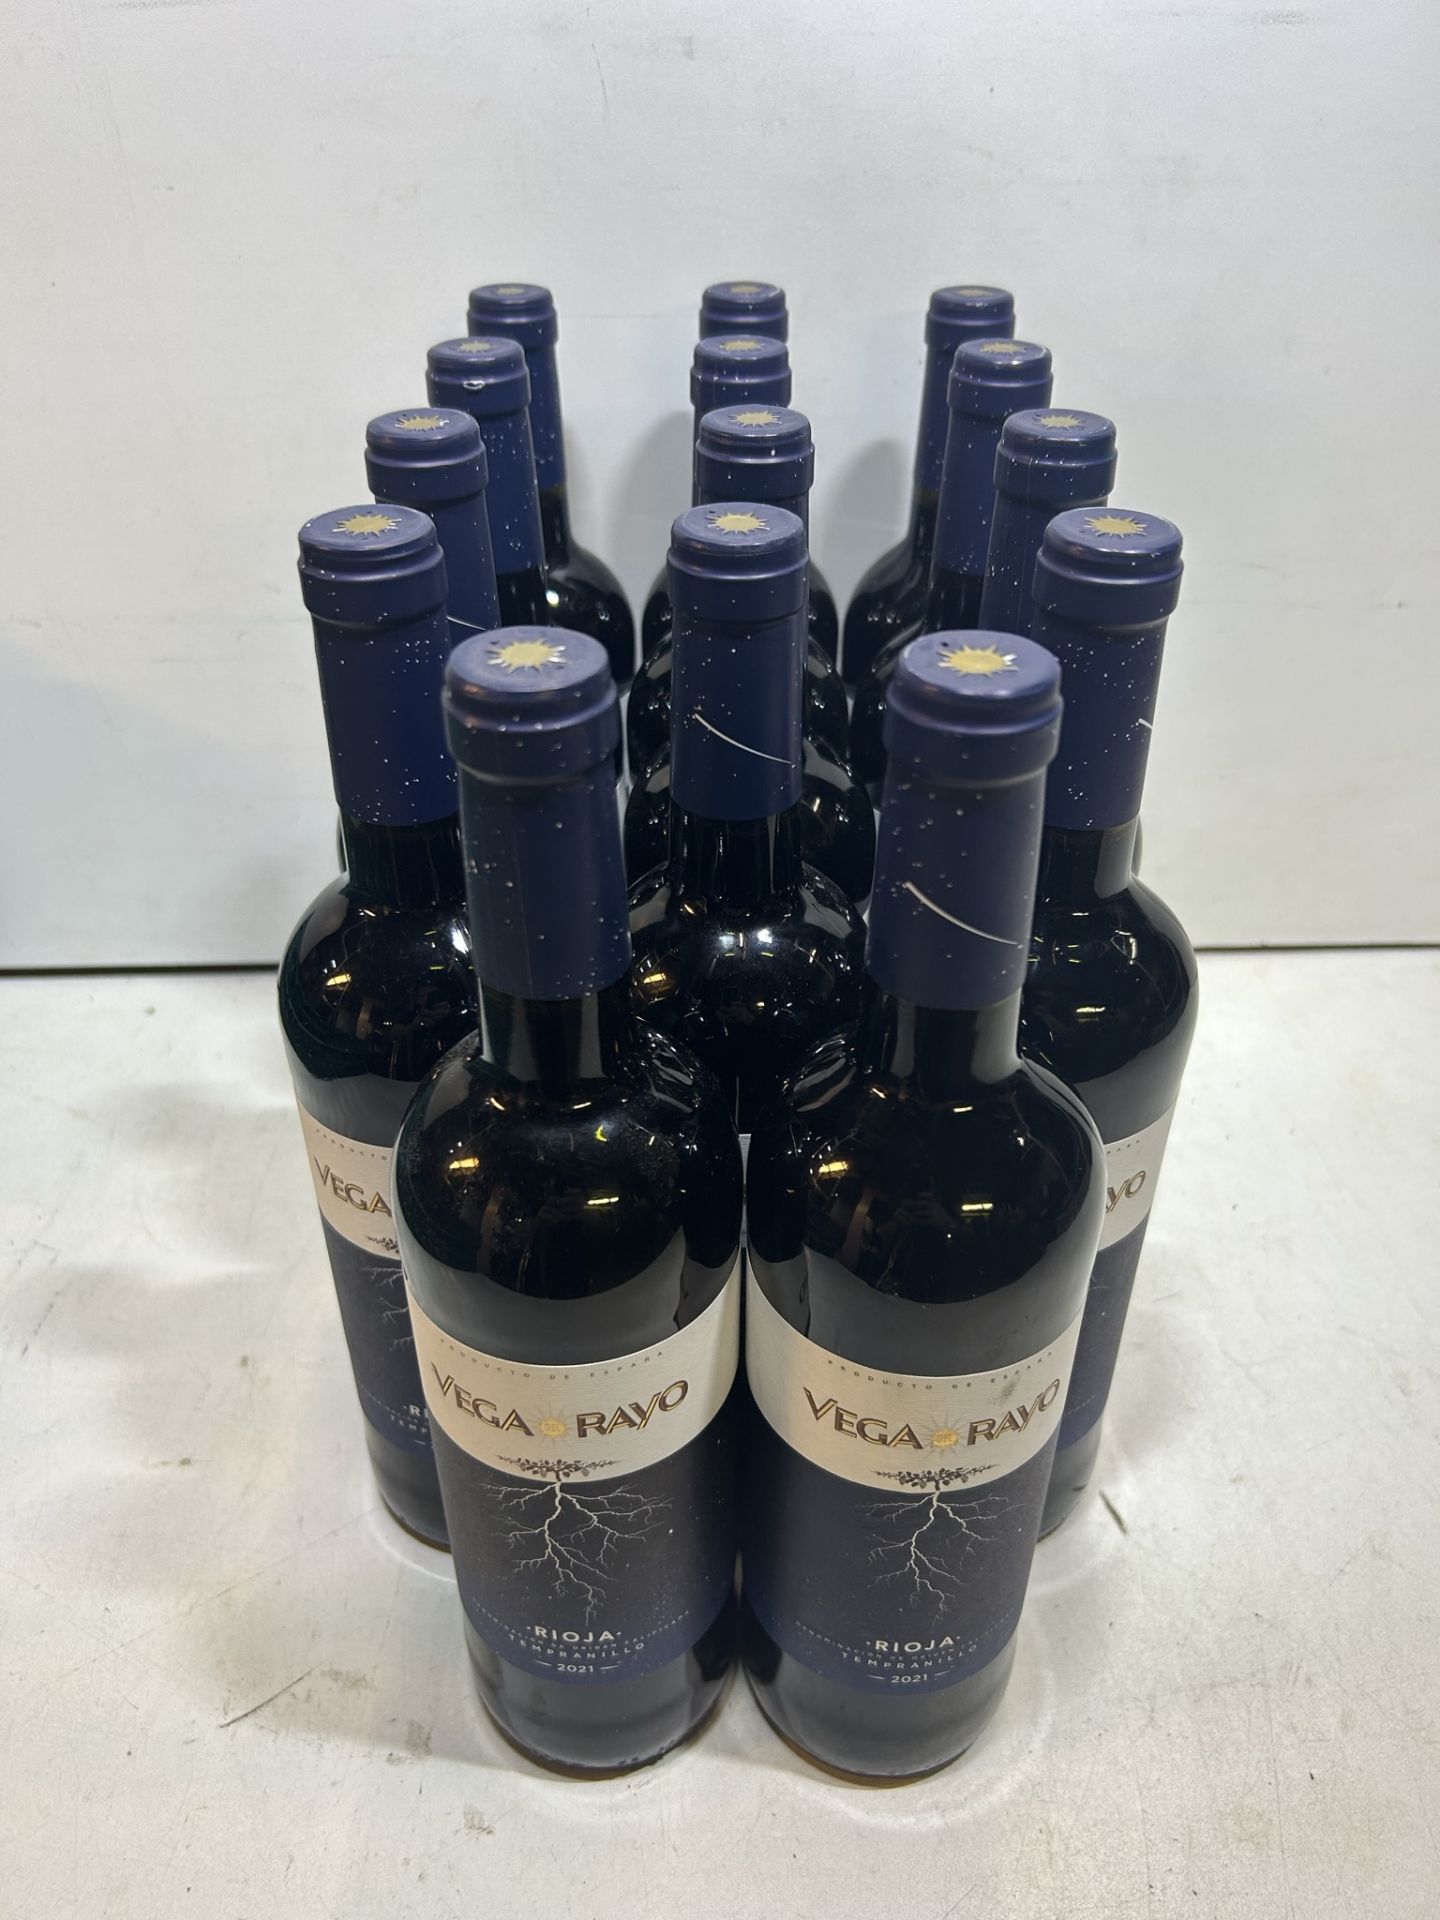 14 x Bottles of Vega Rayo Rioja Tempranillo Wine - Image 2 of 2